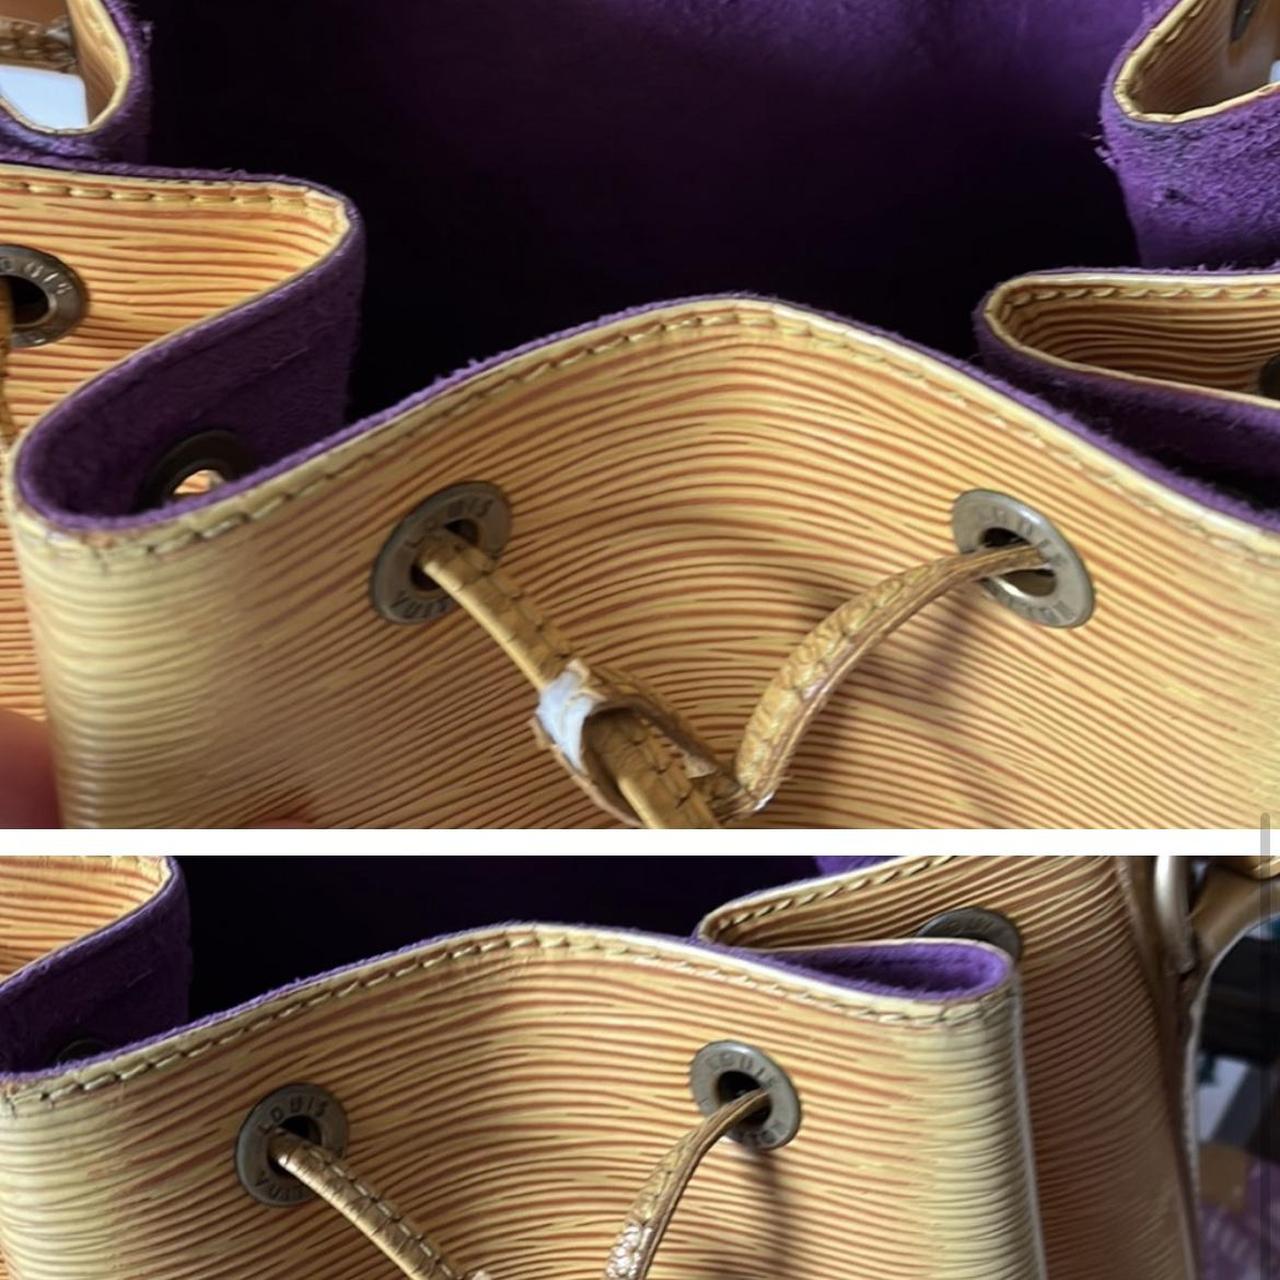 Vintage Louis Vuitton bucket bag Purple suede - Depop